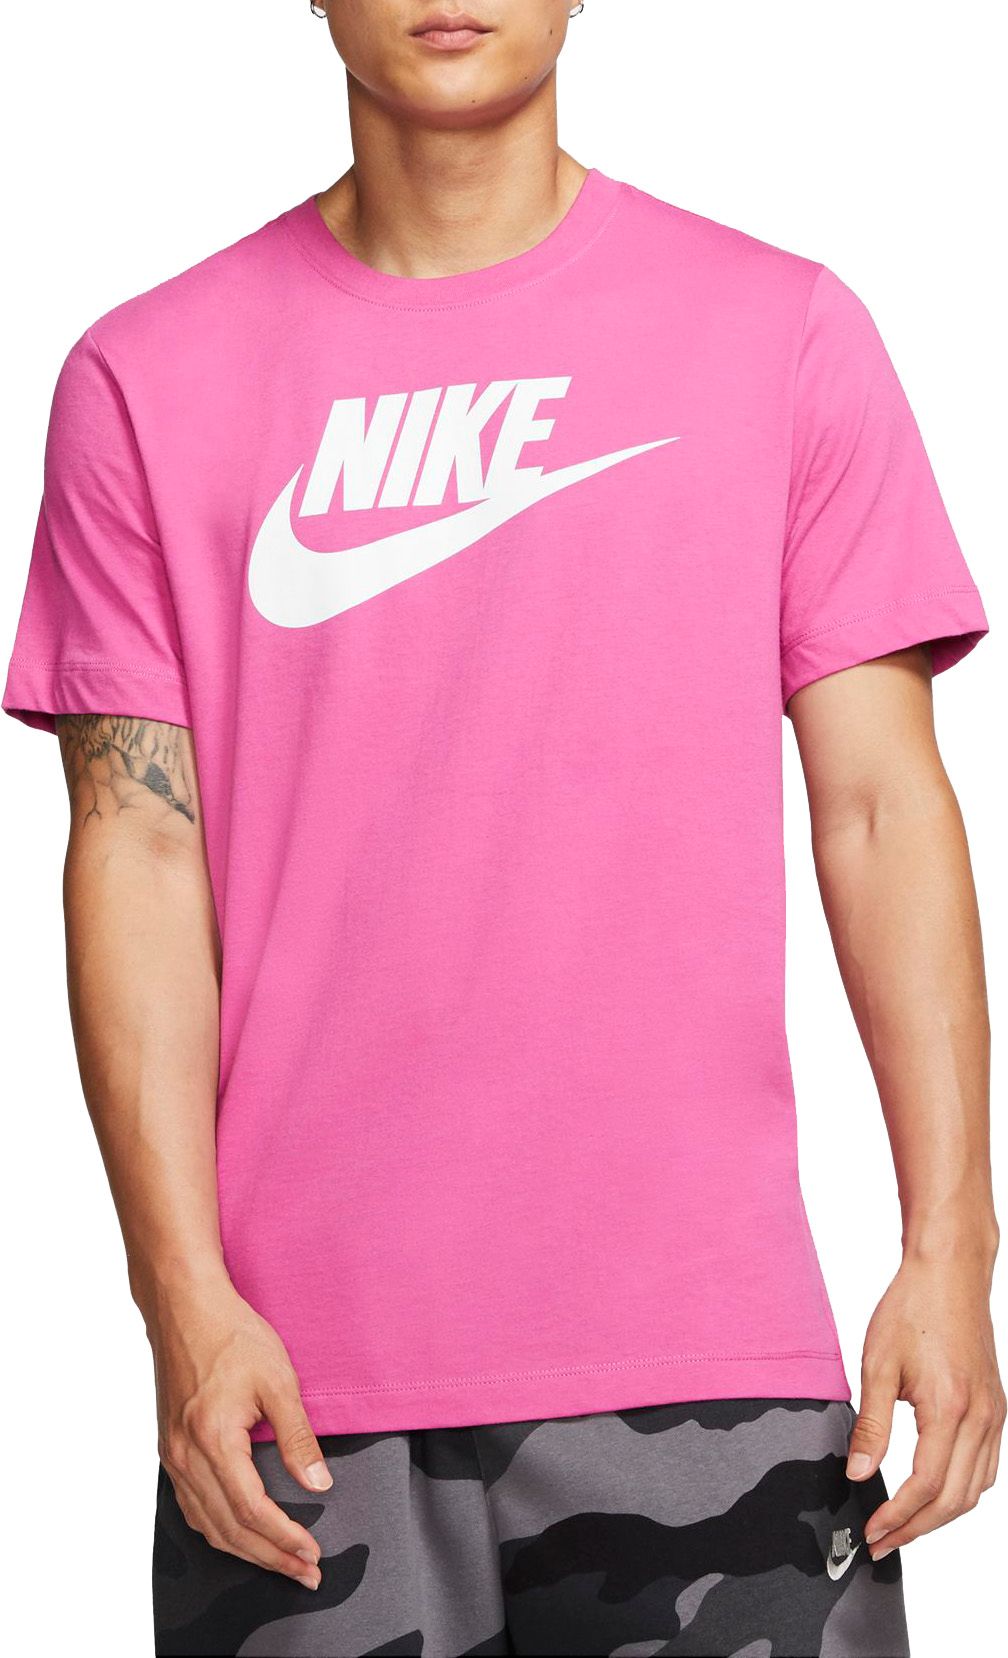 pink and gold nike shirt